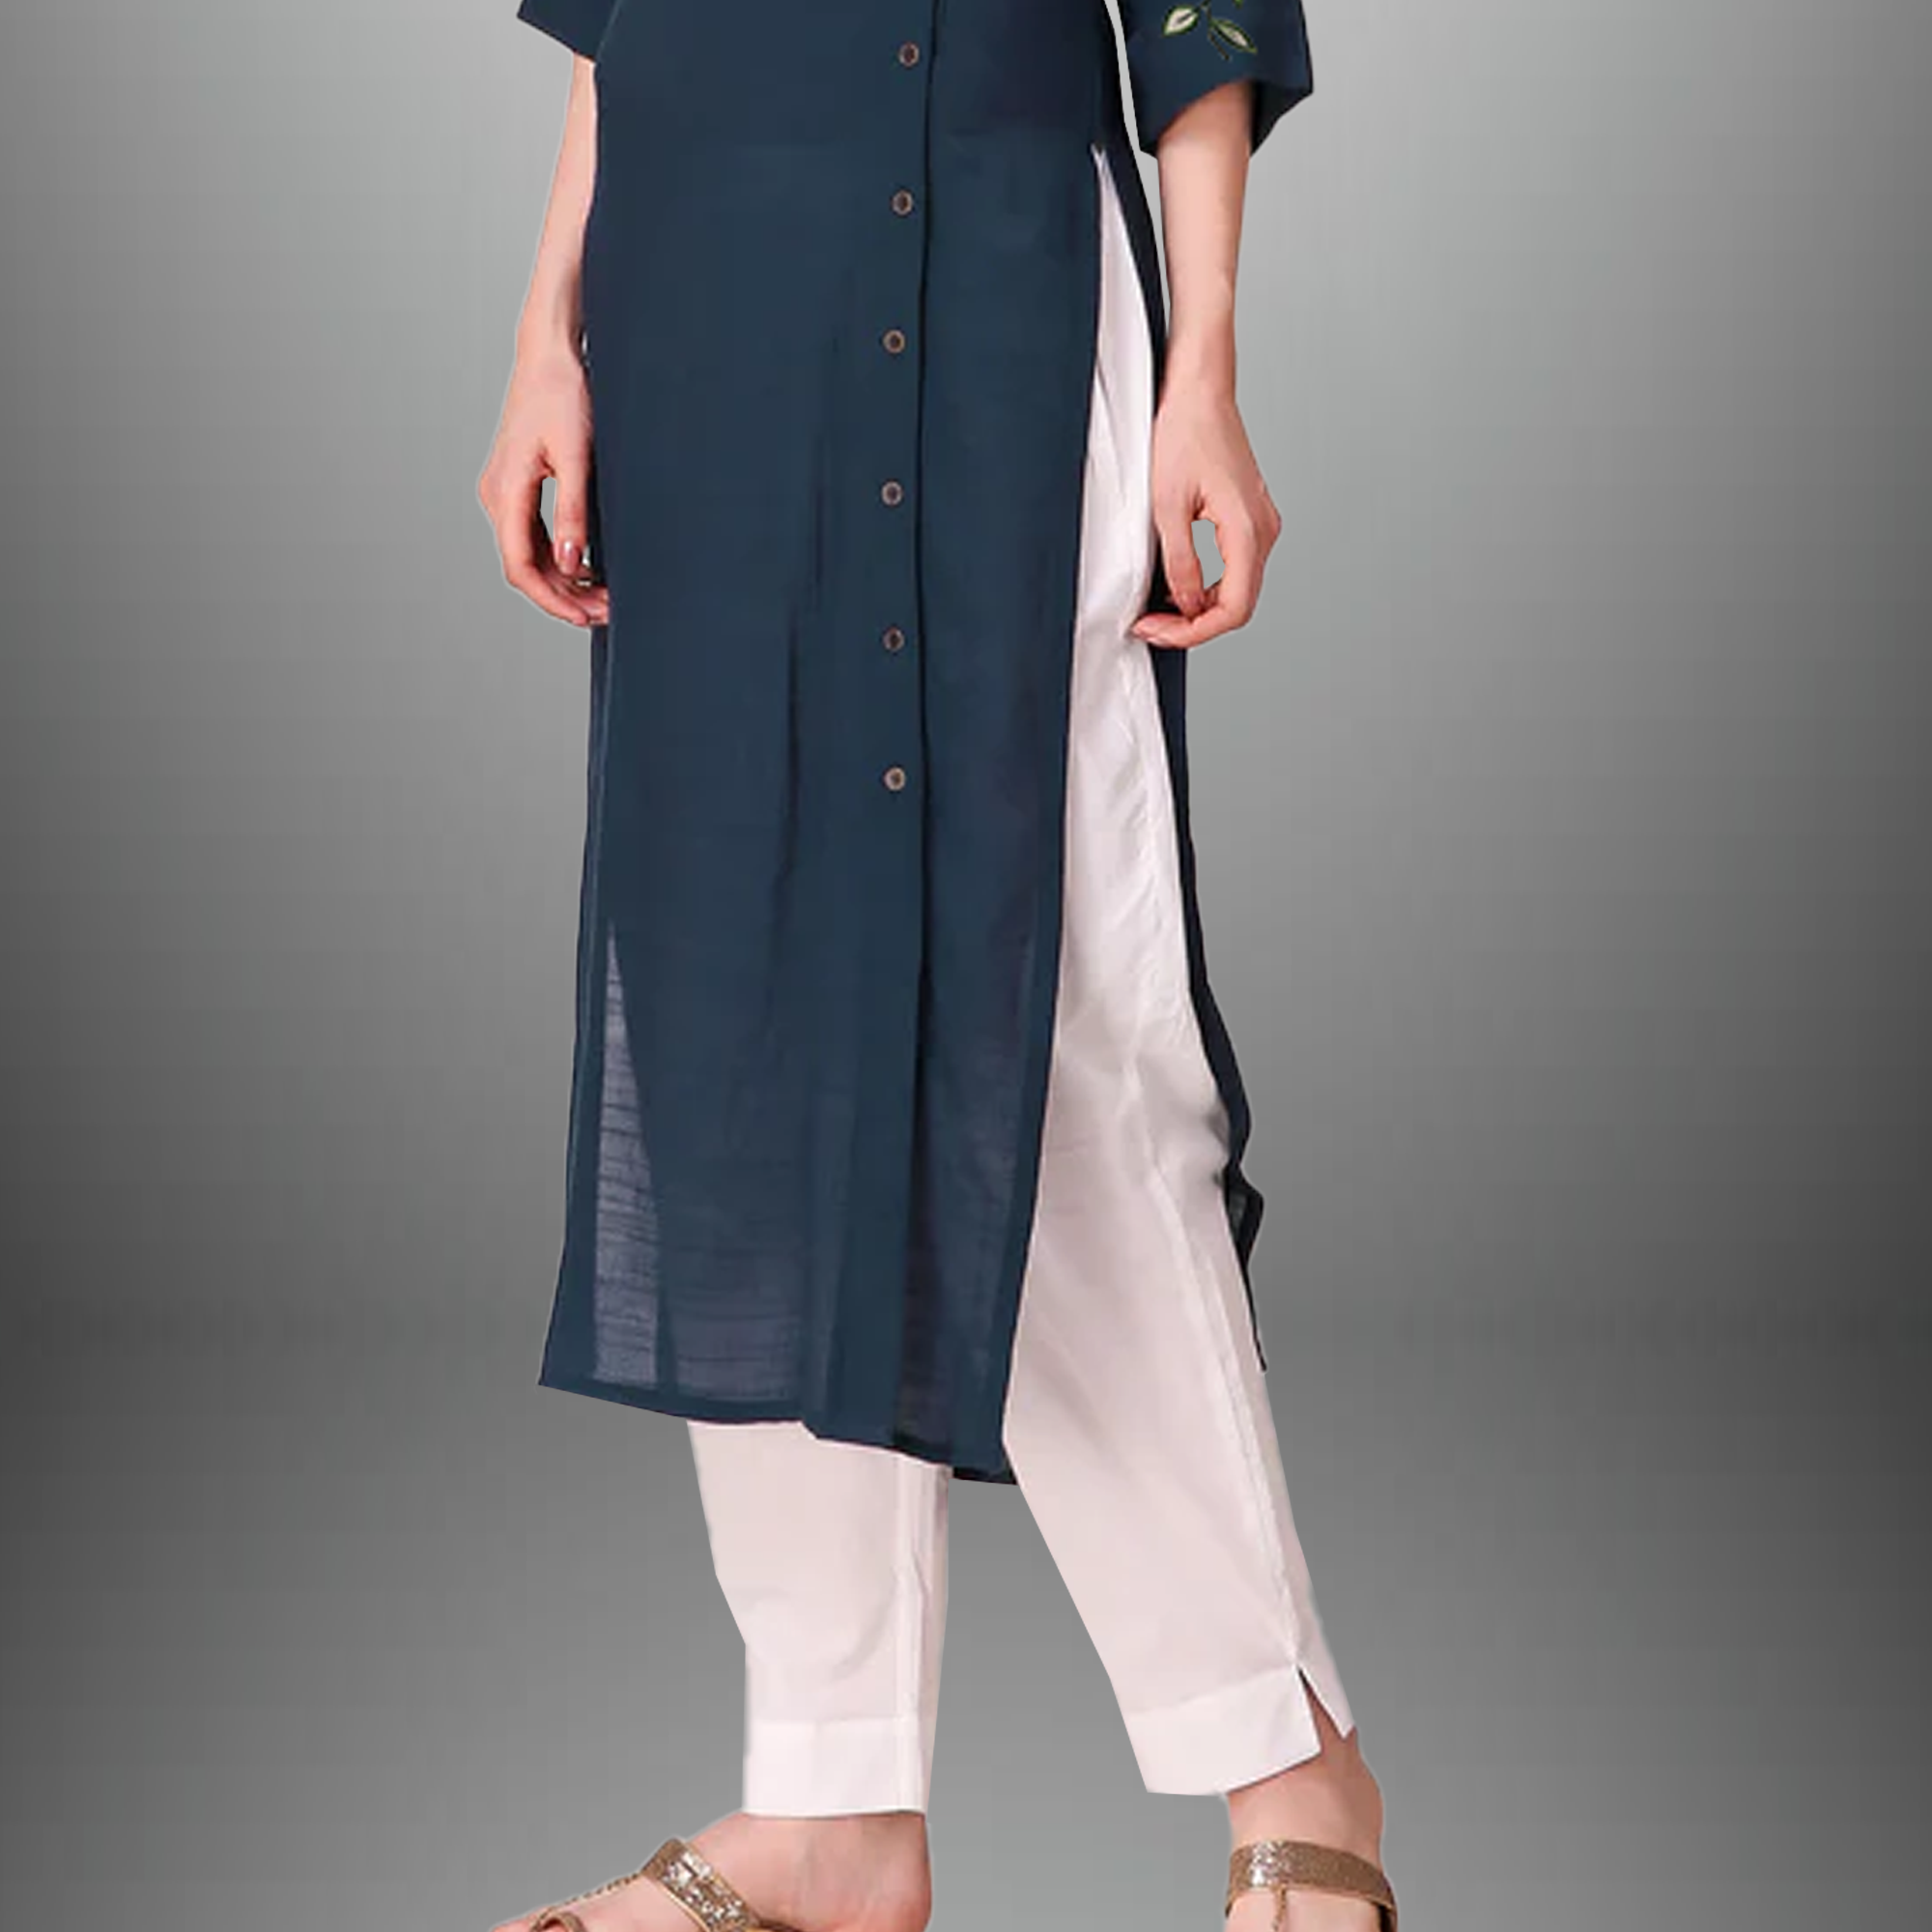 Women's shirt style kurti with white pant-RWKS021